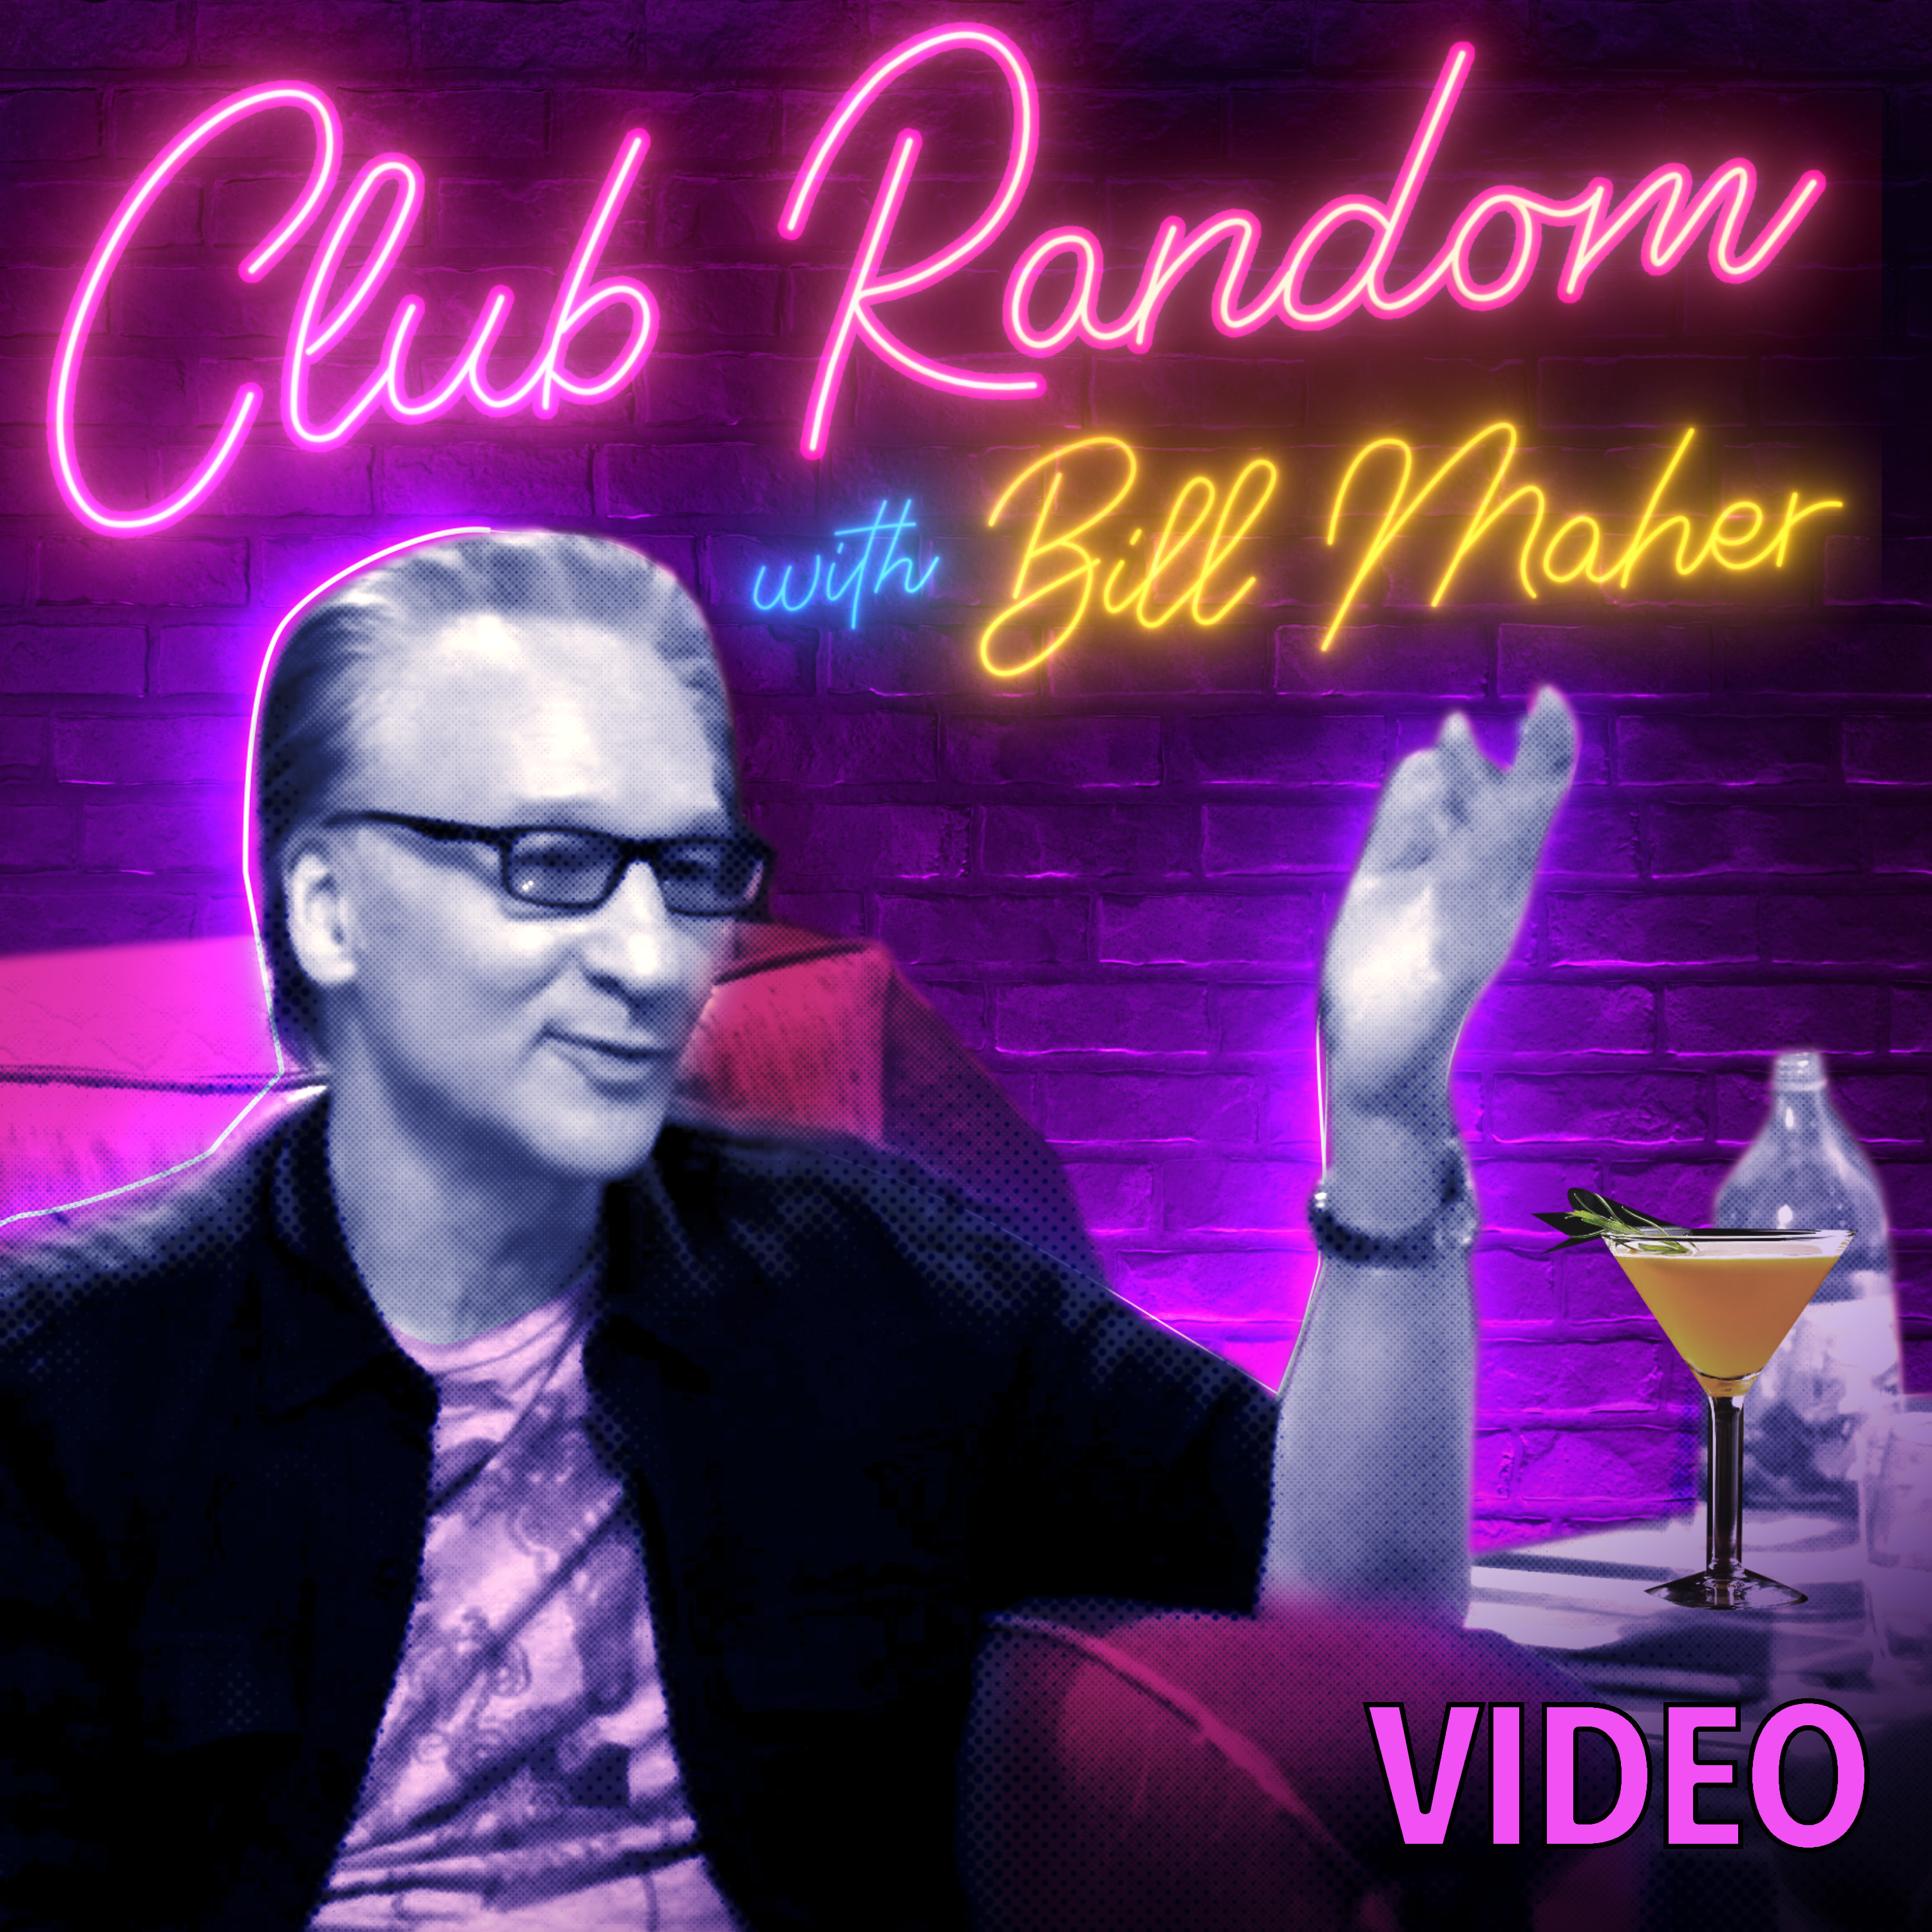 Video: Bryan Cranston | Club Random with Bill Maher